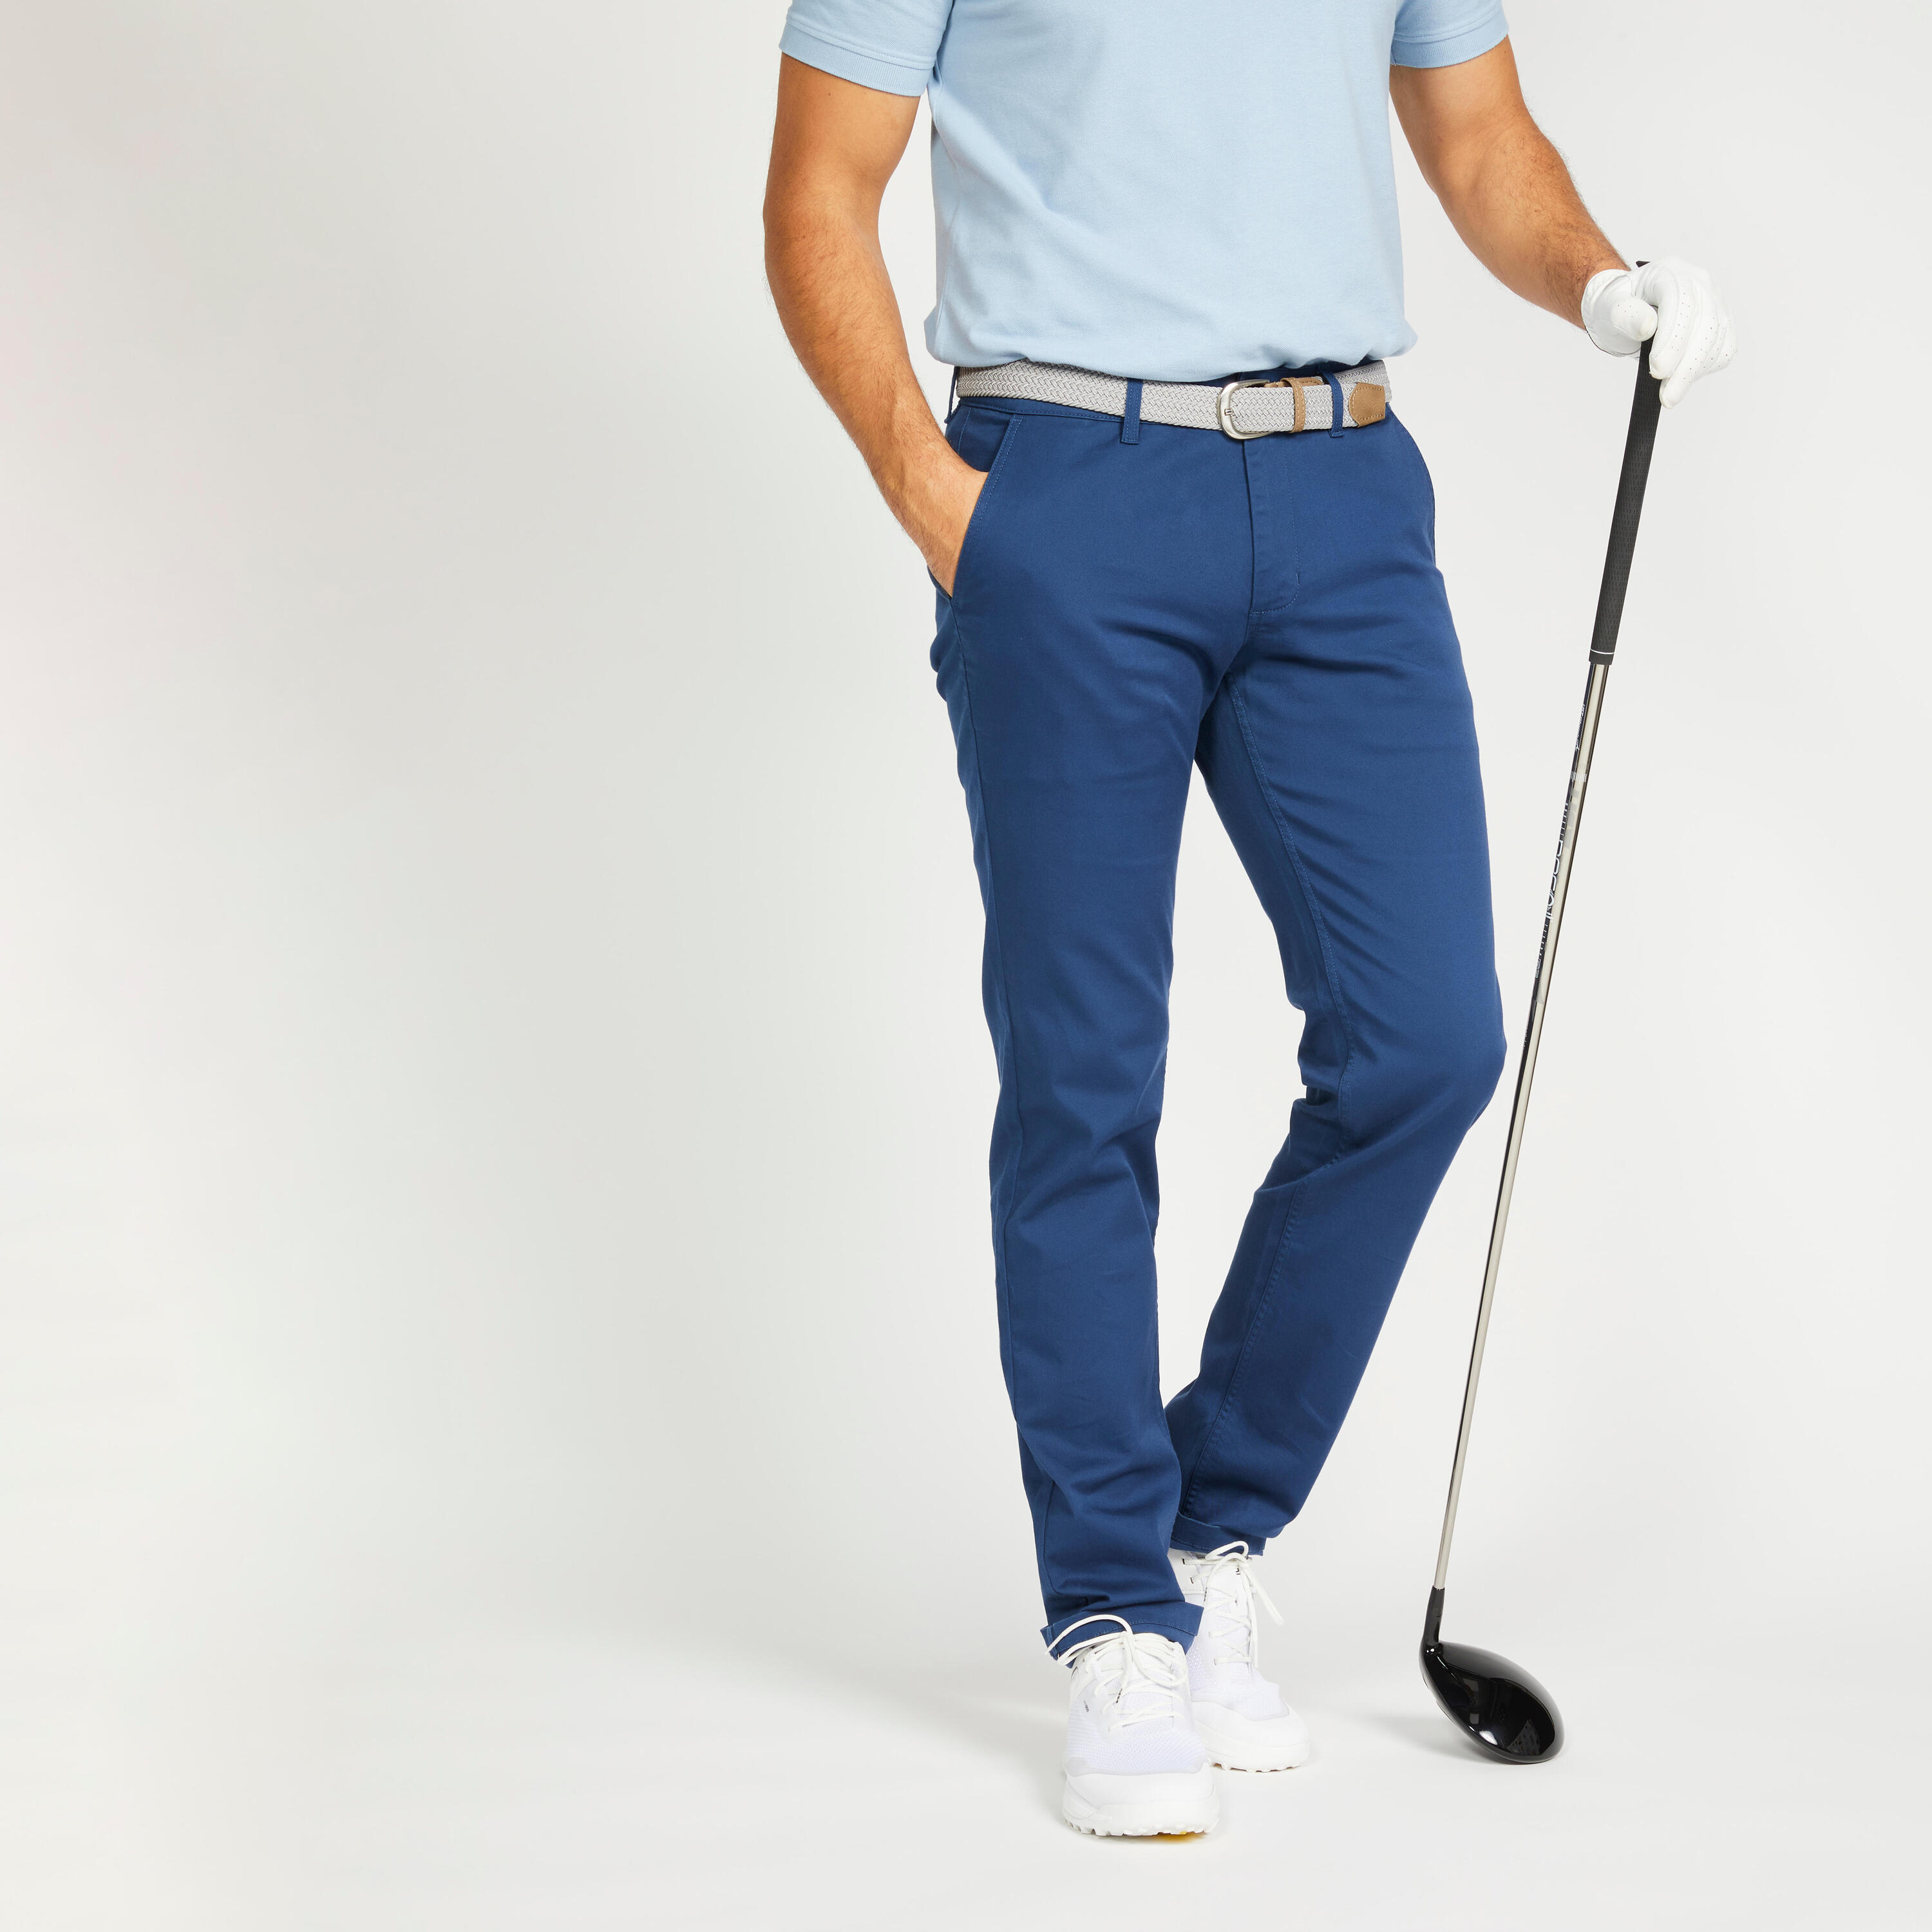 Men's golf trousers - MW500 blue 1/4